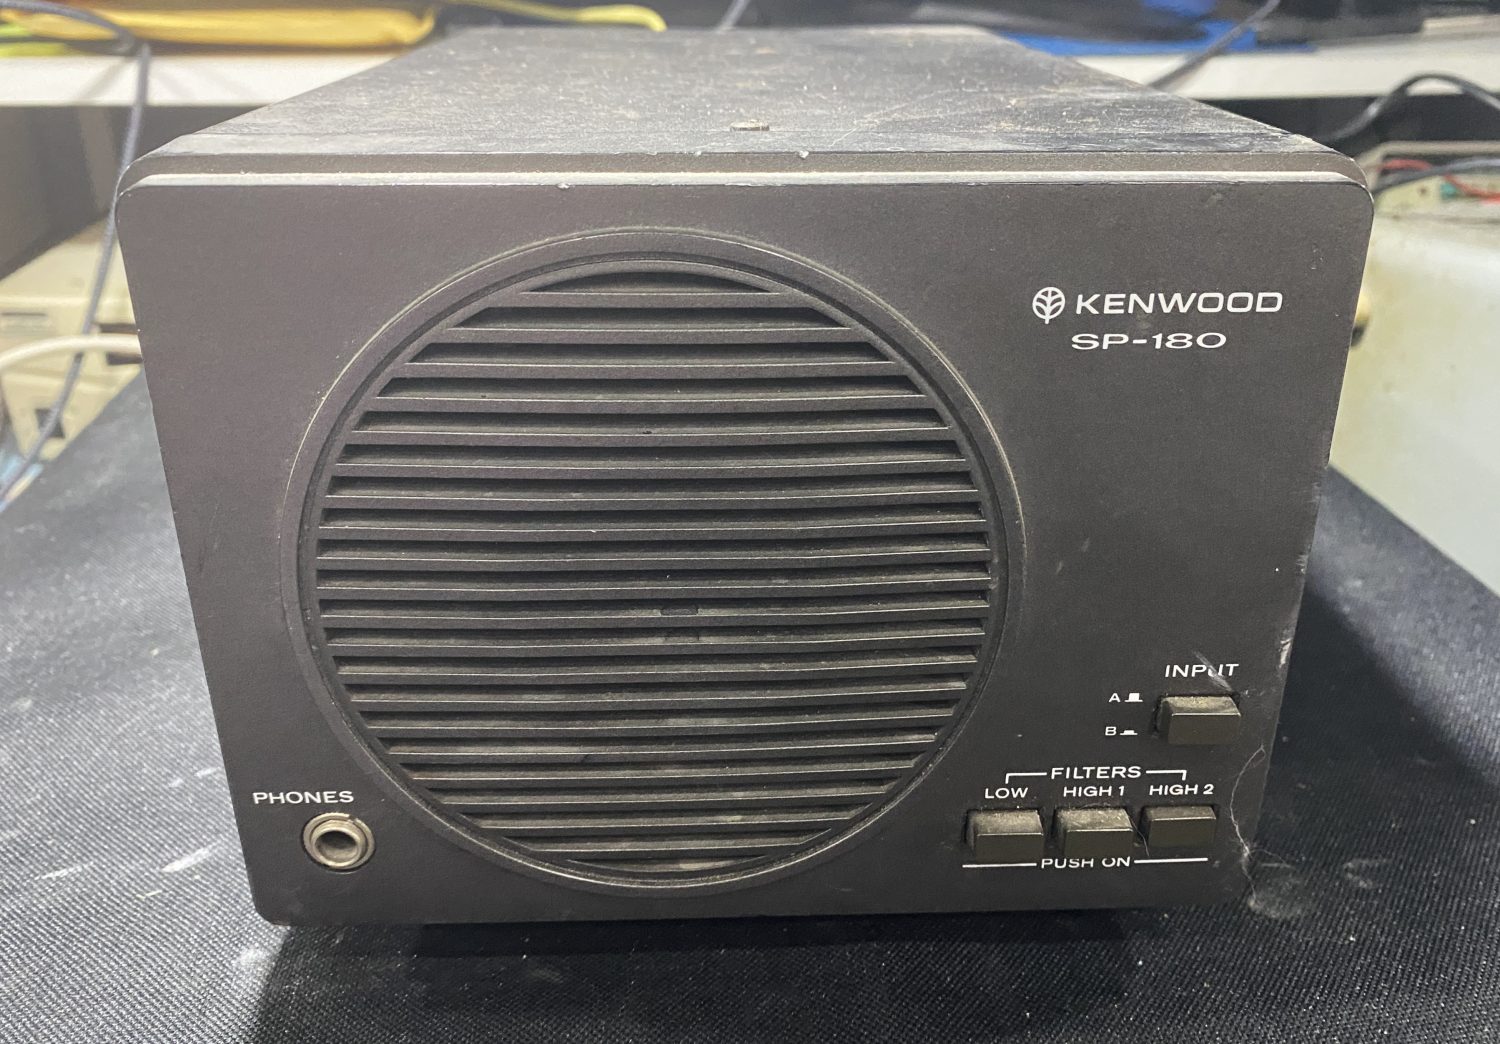 A Very Basic Kenwood SP-180 External Speaker